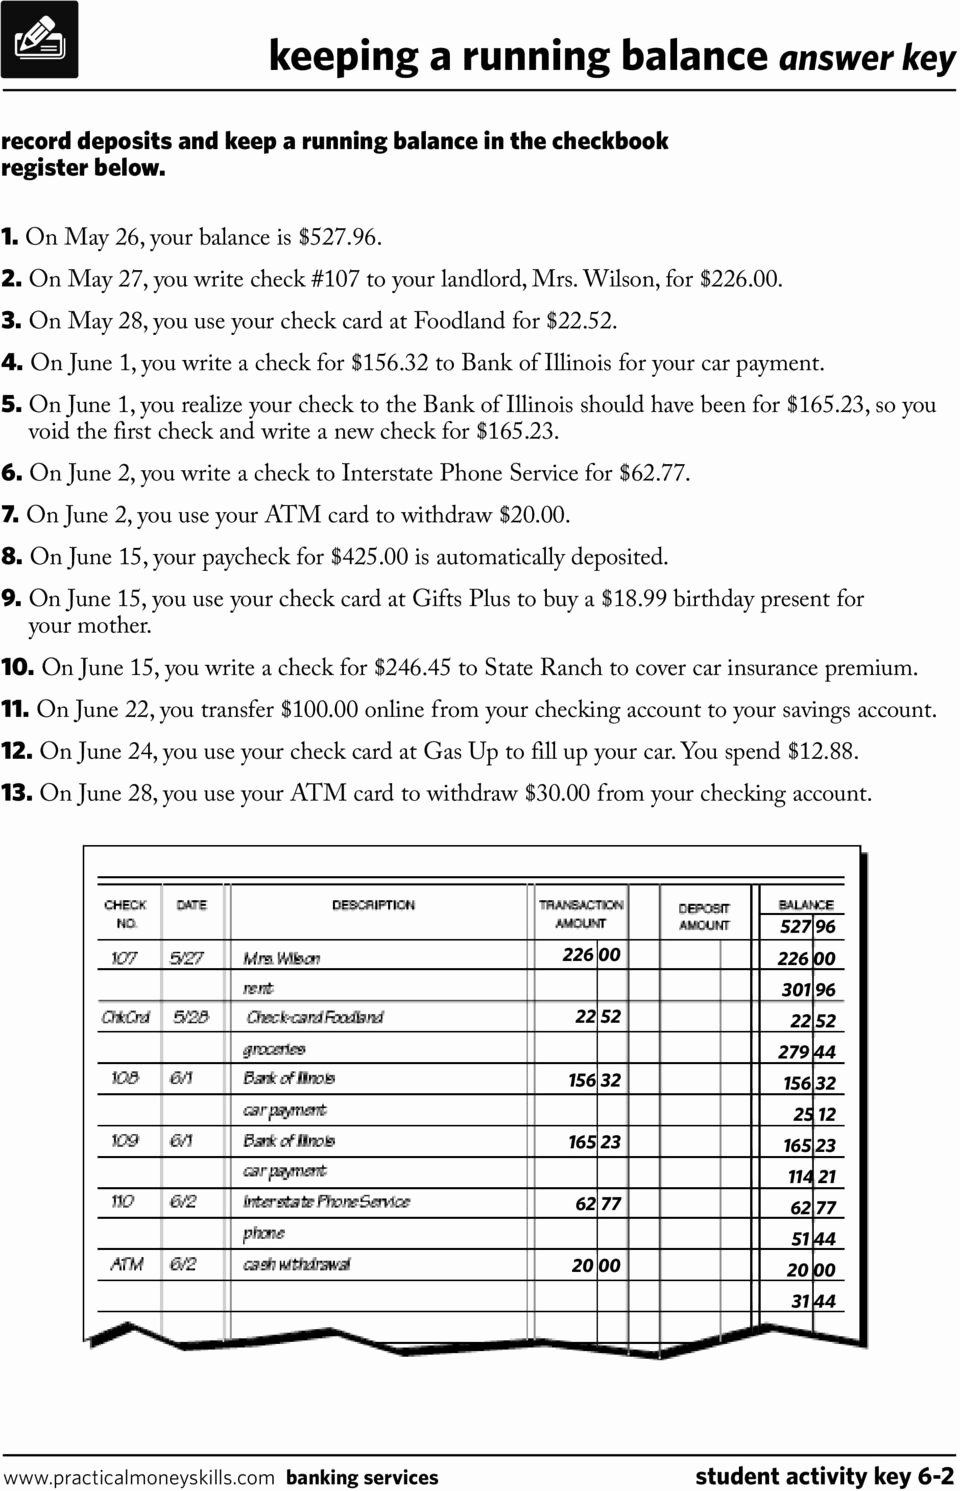 Checkbook Register Worksheet 1 Answers Lovely Keeping A Running Balance Answer Key Pdf